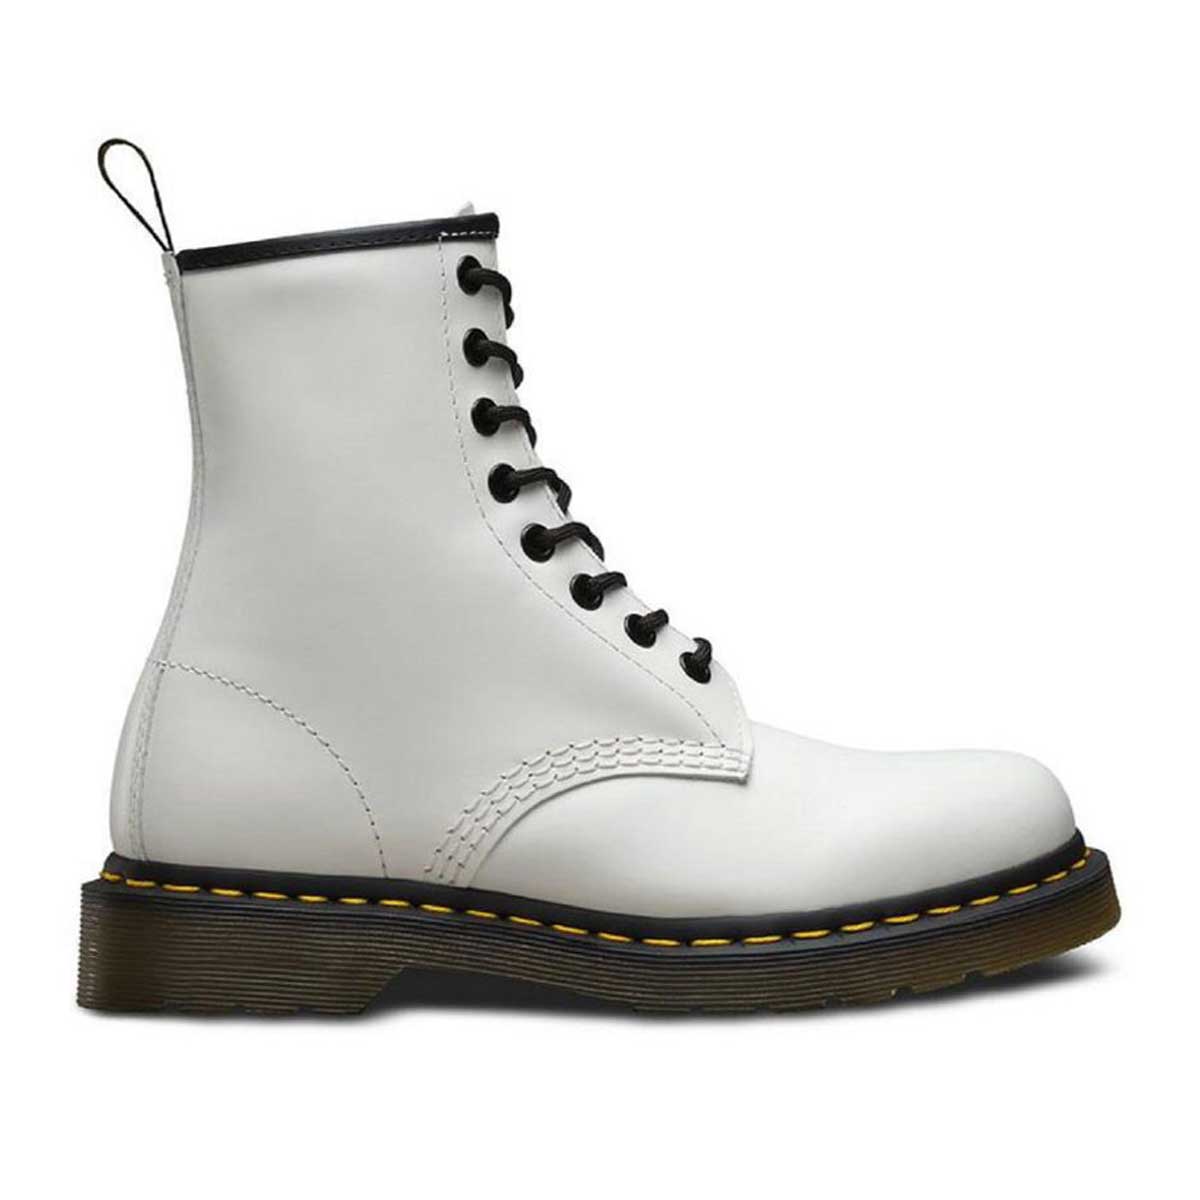 Tbs + White,Full-Grain (Smooth Leather) F7b22 Grain Navy White Jolina,Navy Full rucecq1471-Women's Comfort Shoes - www.lifeoutofoffice.com